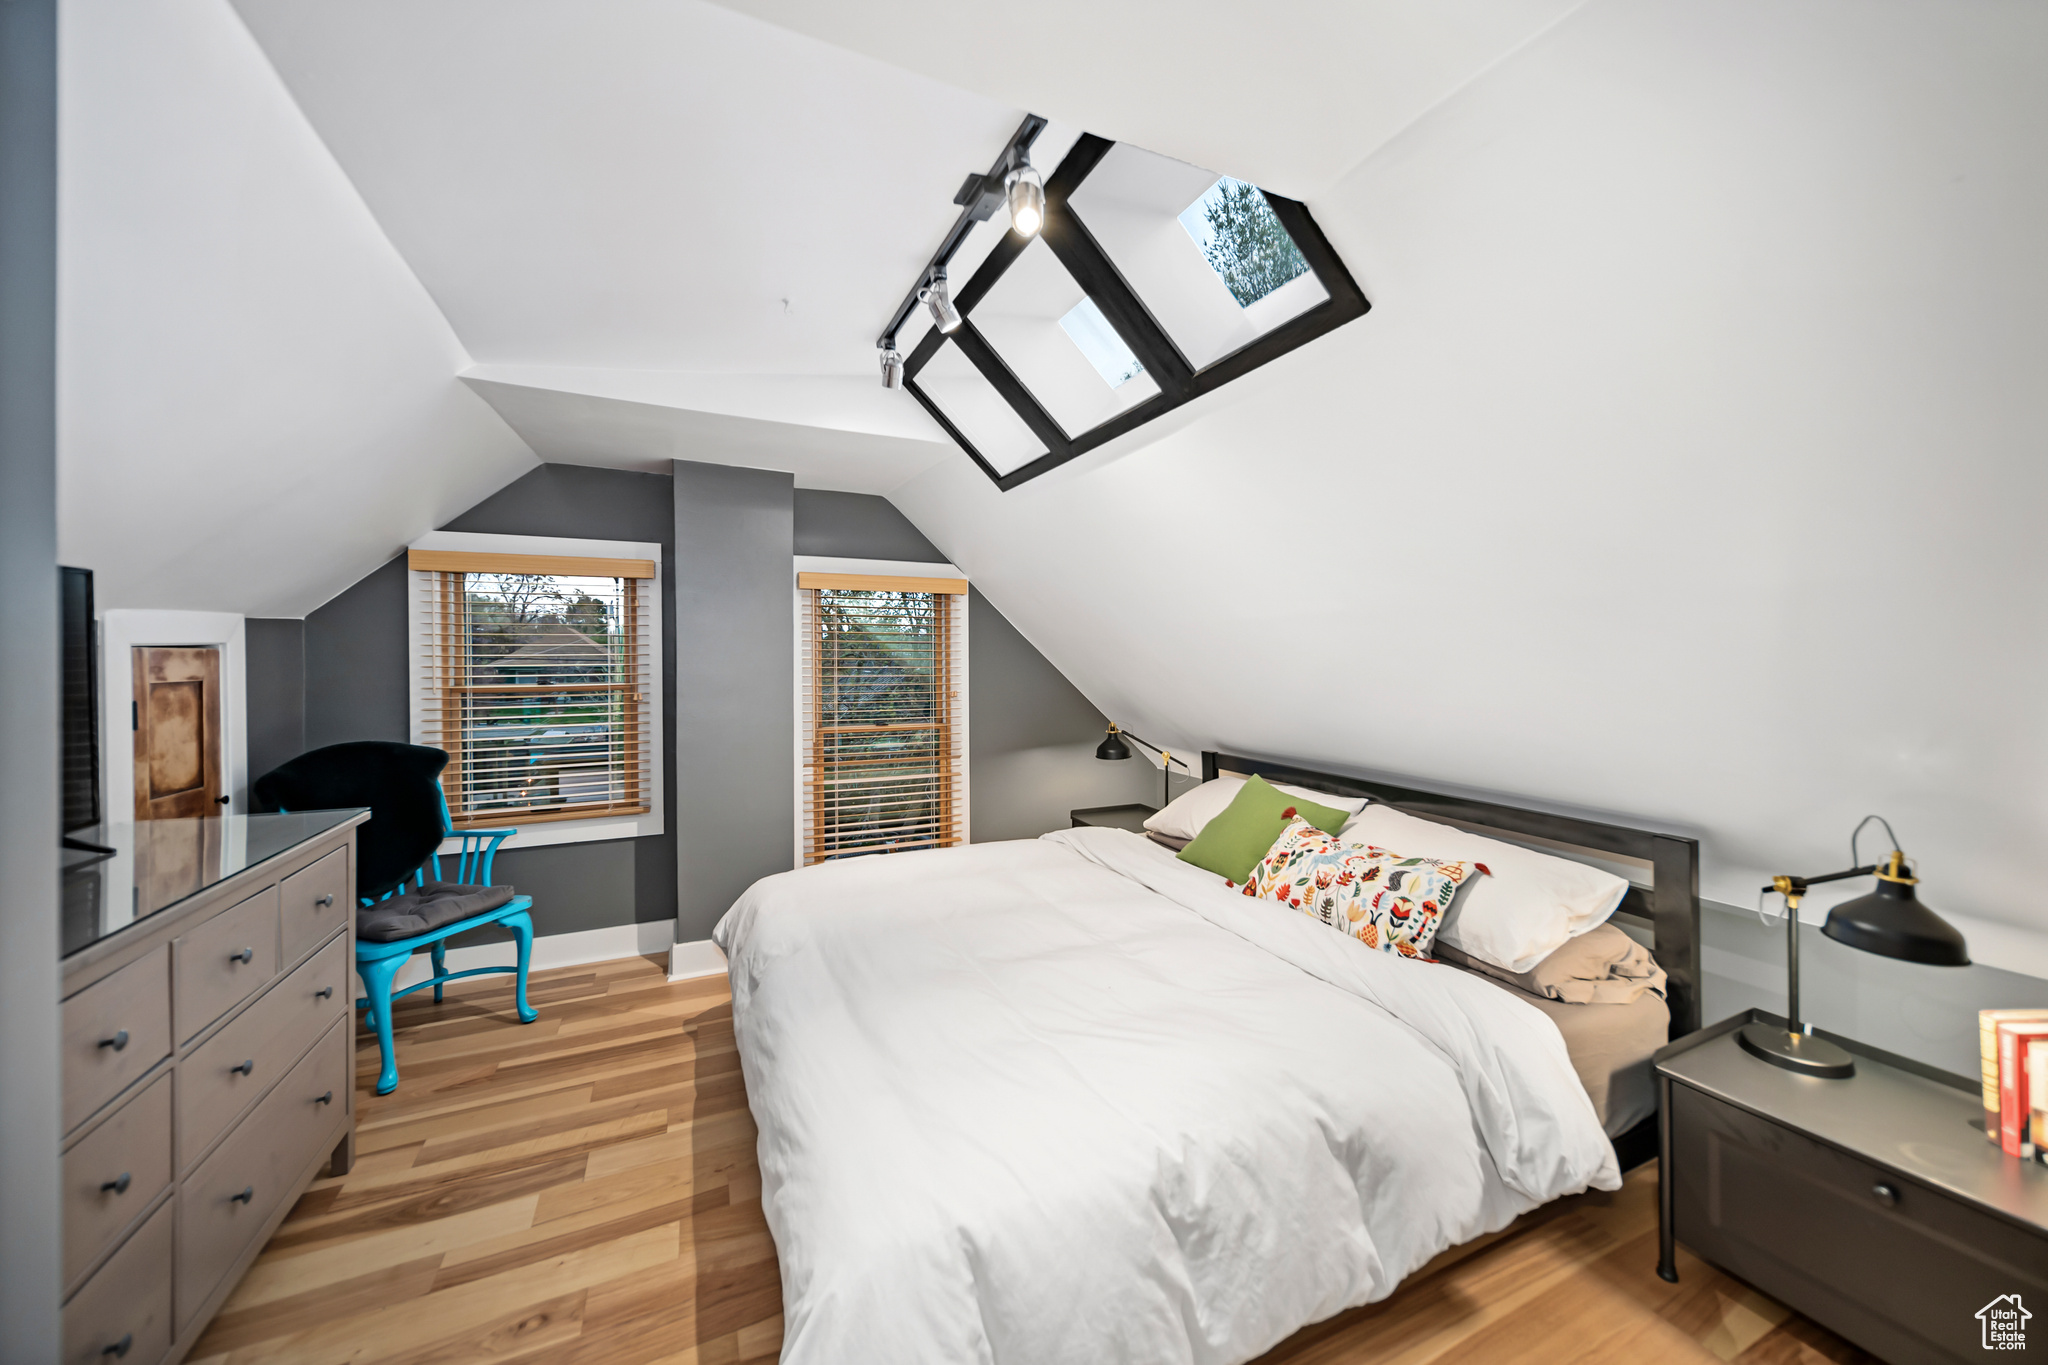 Bedroom 1, Lofted Ceiling w/ Skylights, Track Lighting, Wood Blinds, Wood Floors